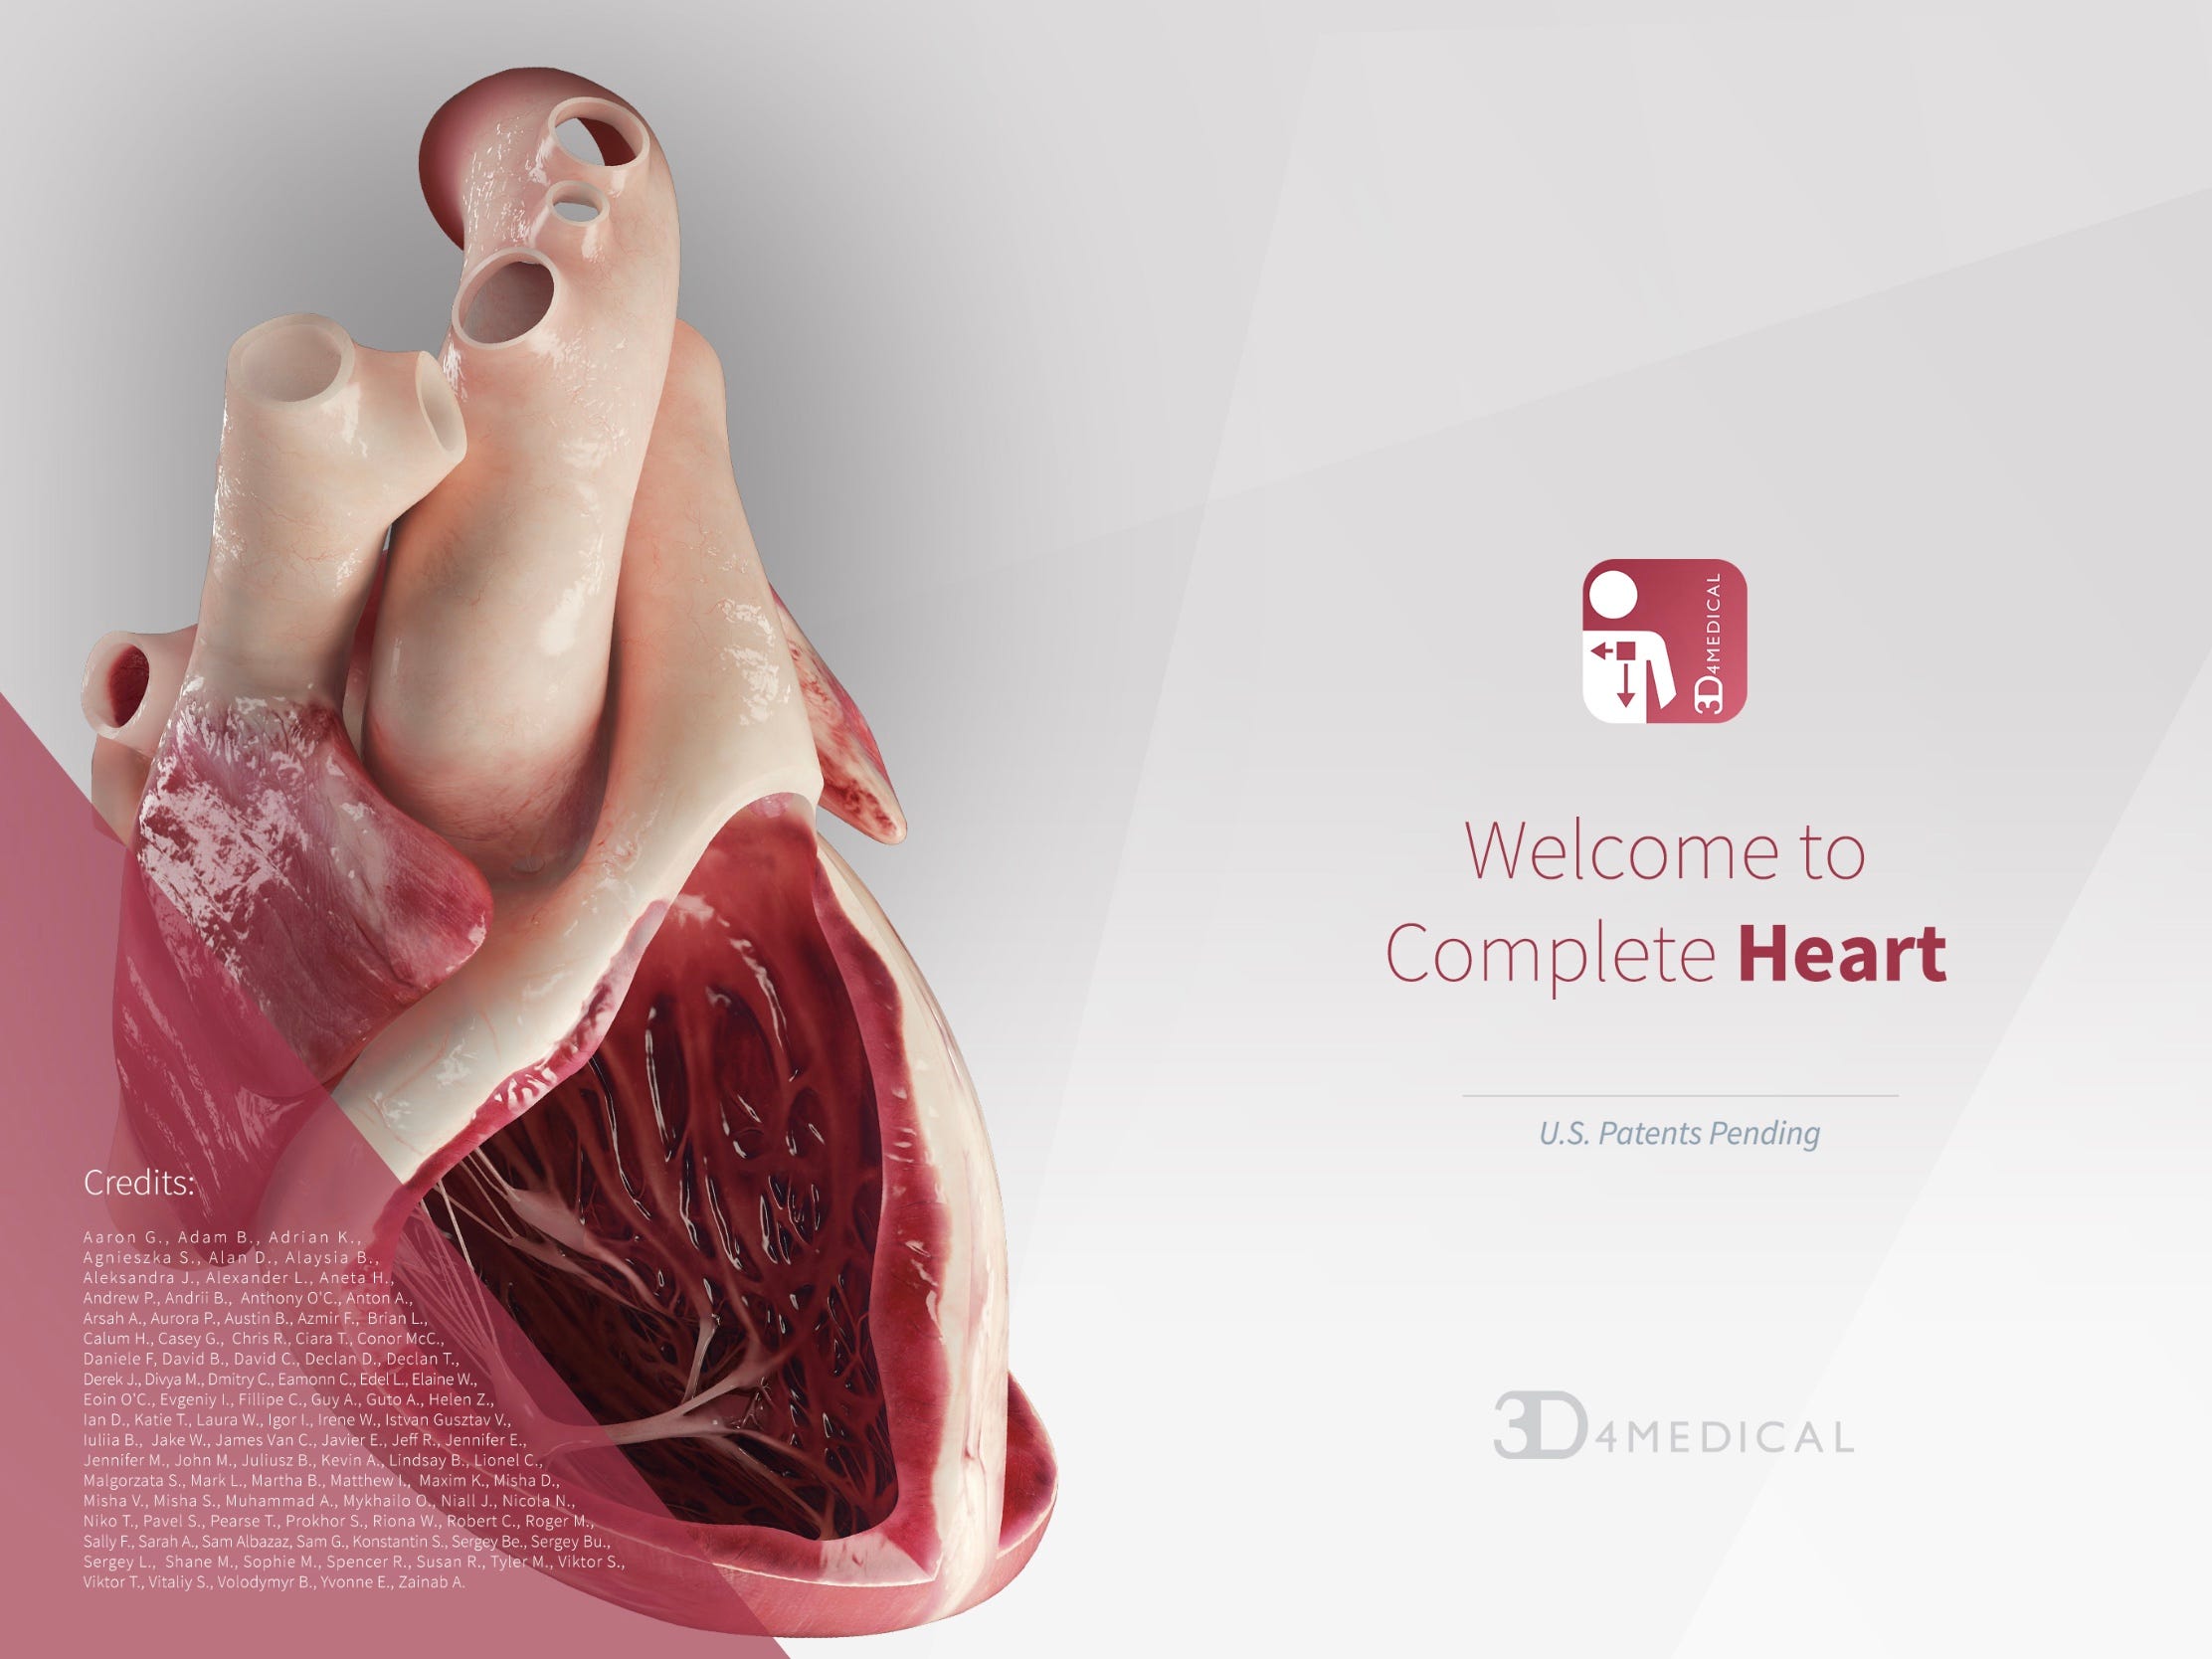 3d4medicalから心臓の解剖 生理アプリ Complete Heart Ipad が登場 By Ken Ipug Me